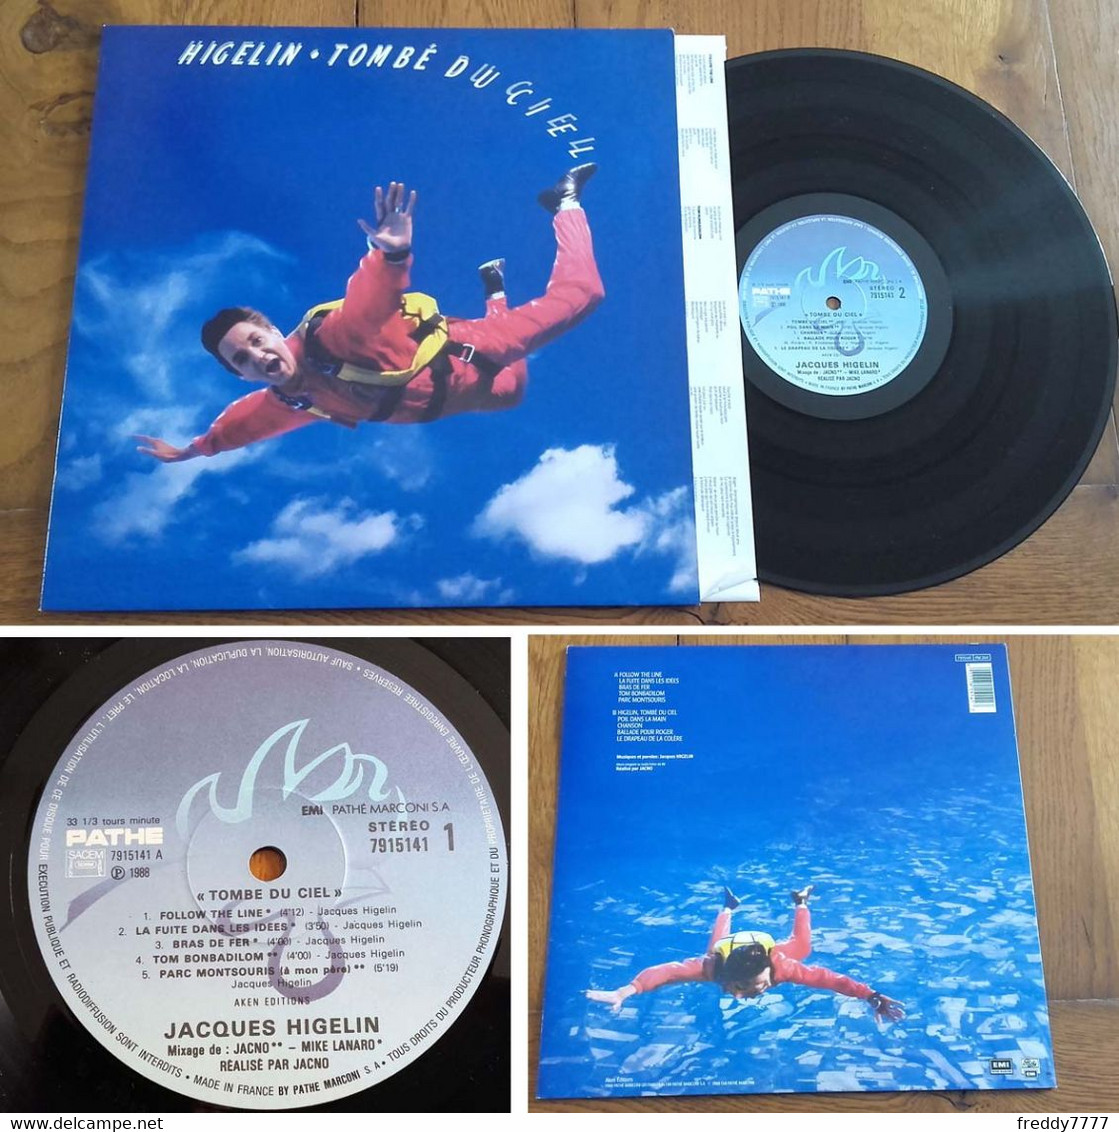 RARE French LP 33t RPM (12") JACQUES HIGELIN (Jacno, 1988) - Collectors